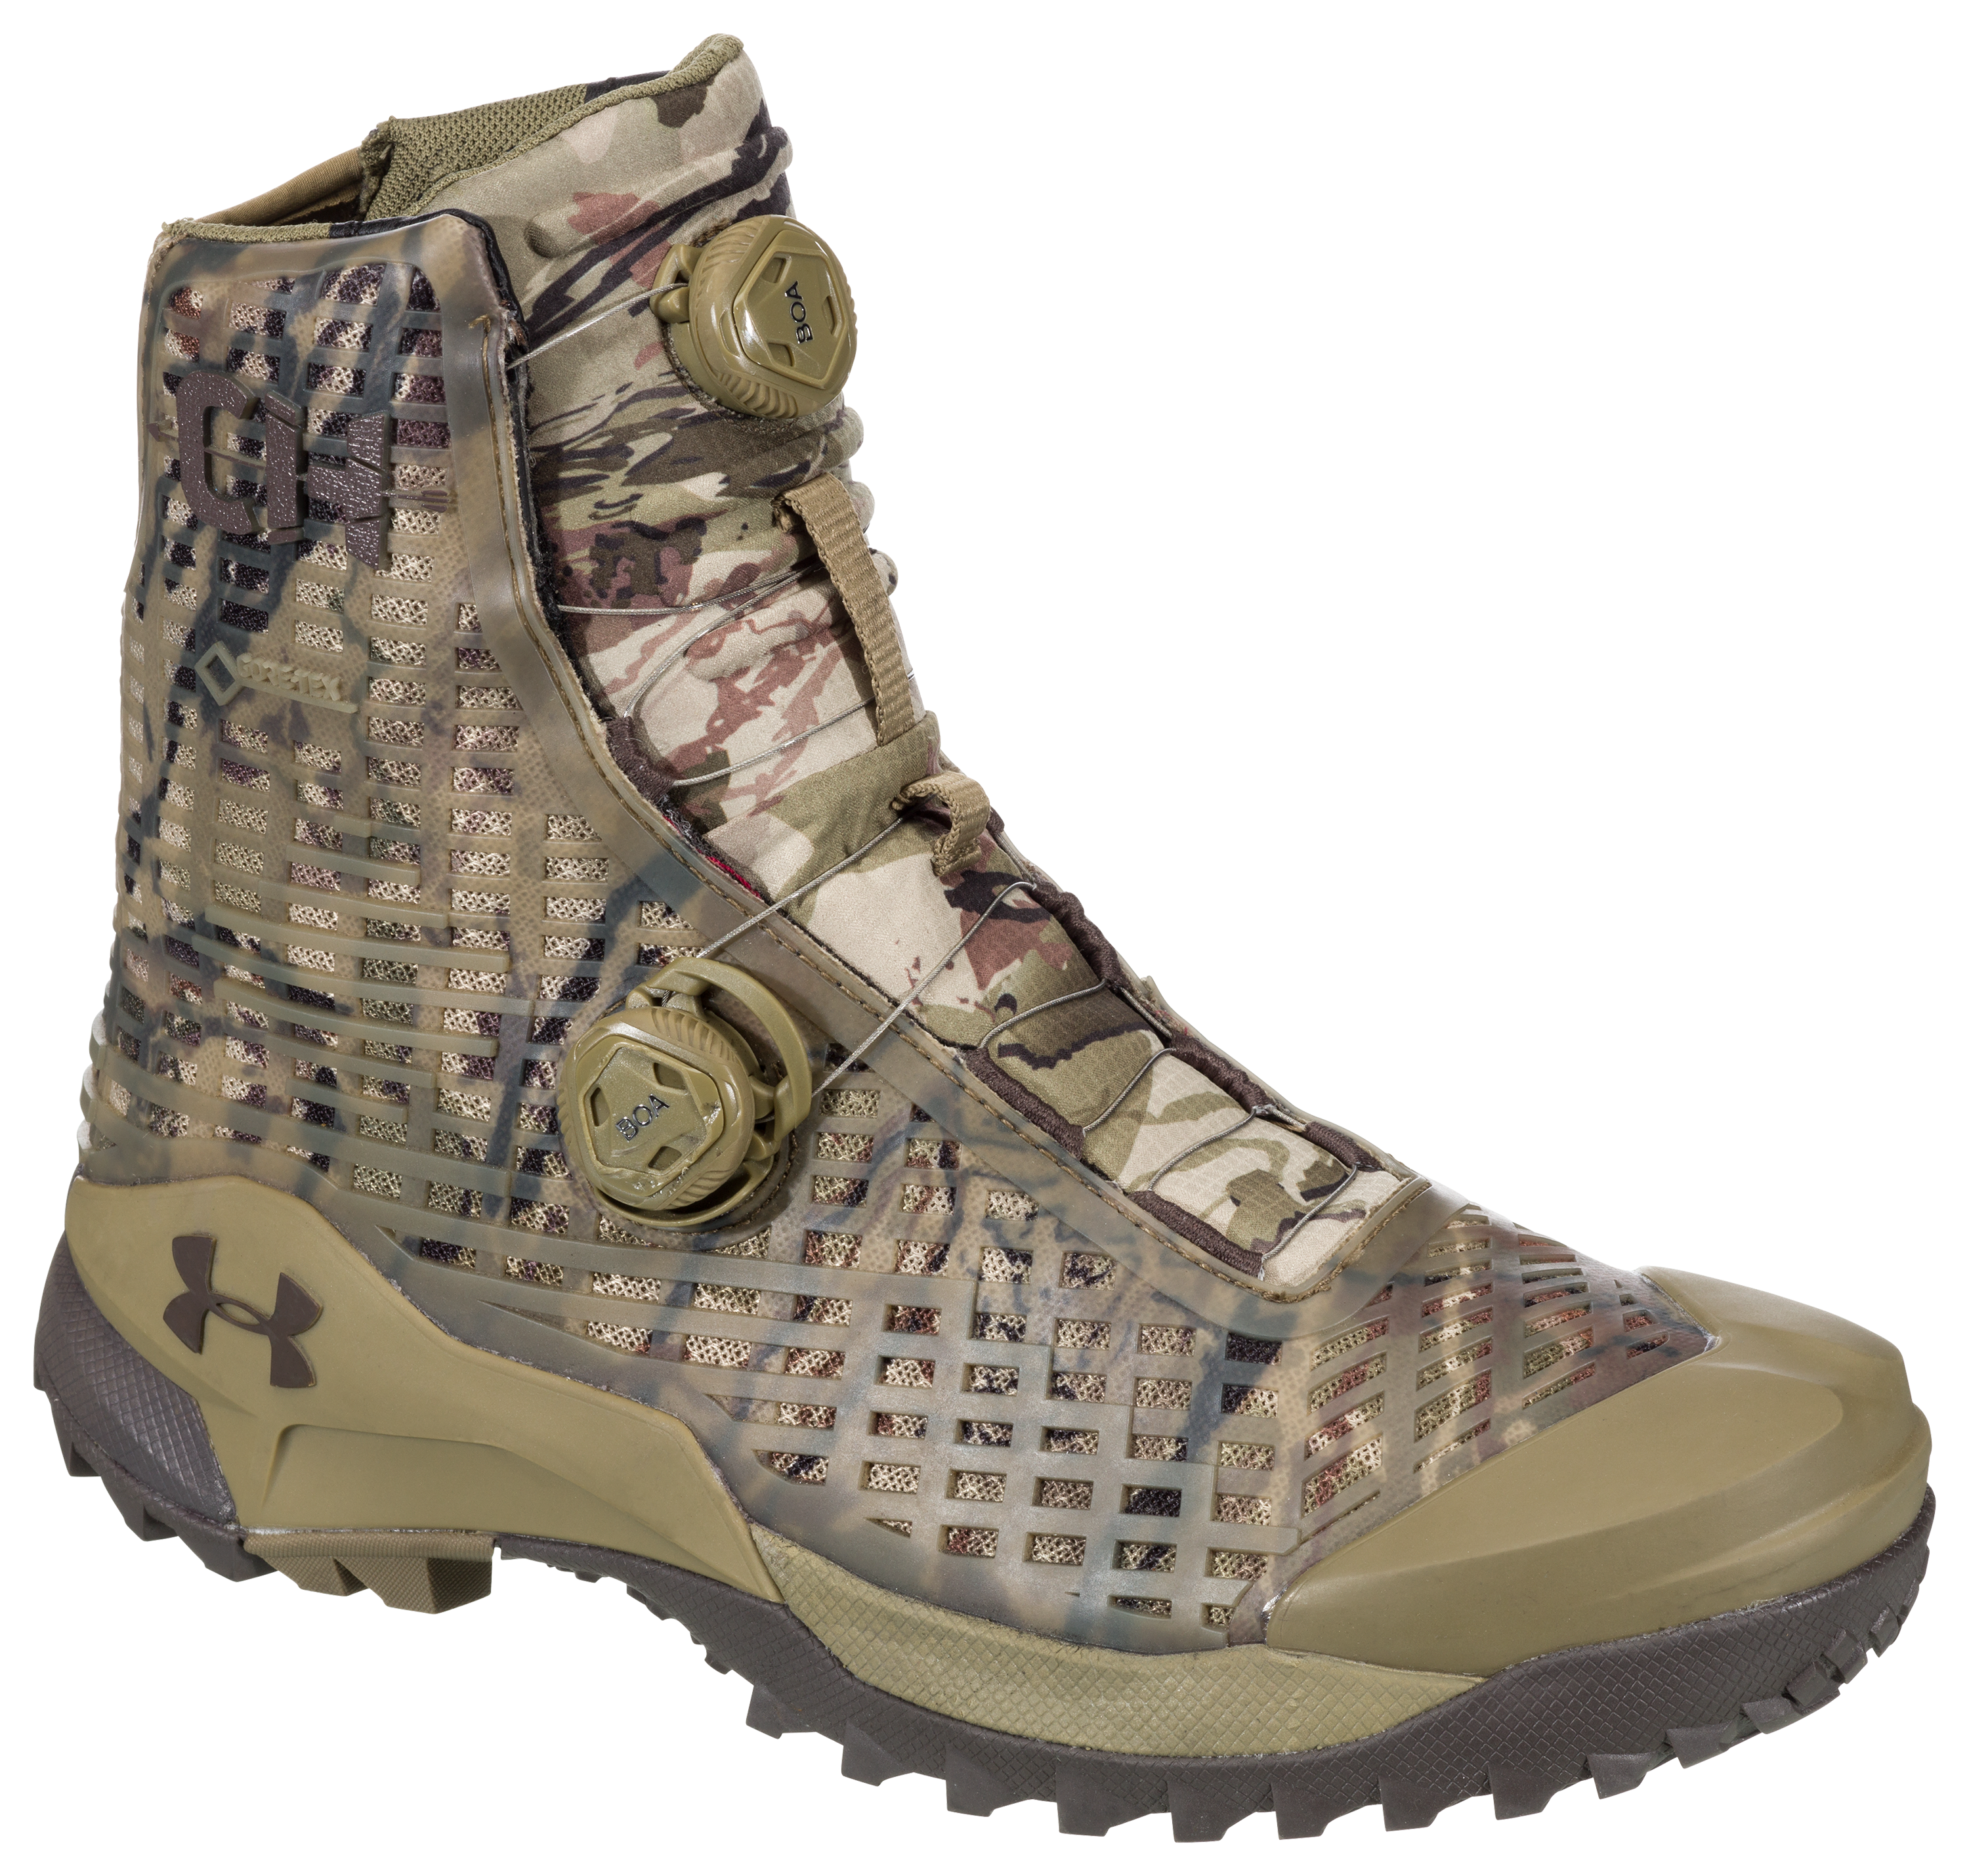 Under Armour CH1 GTX GORE-TEX Tactical Boots  for Men - Bayou Ridge Reaper Camo Barren - 10M